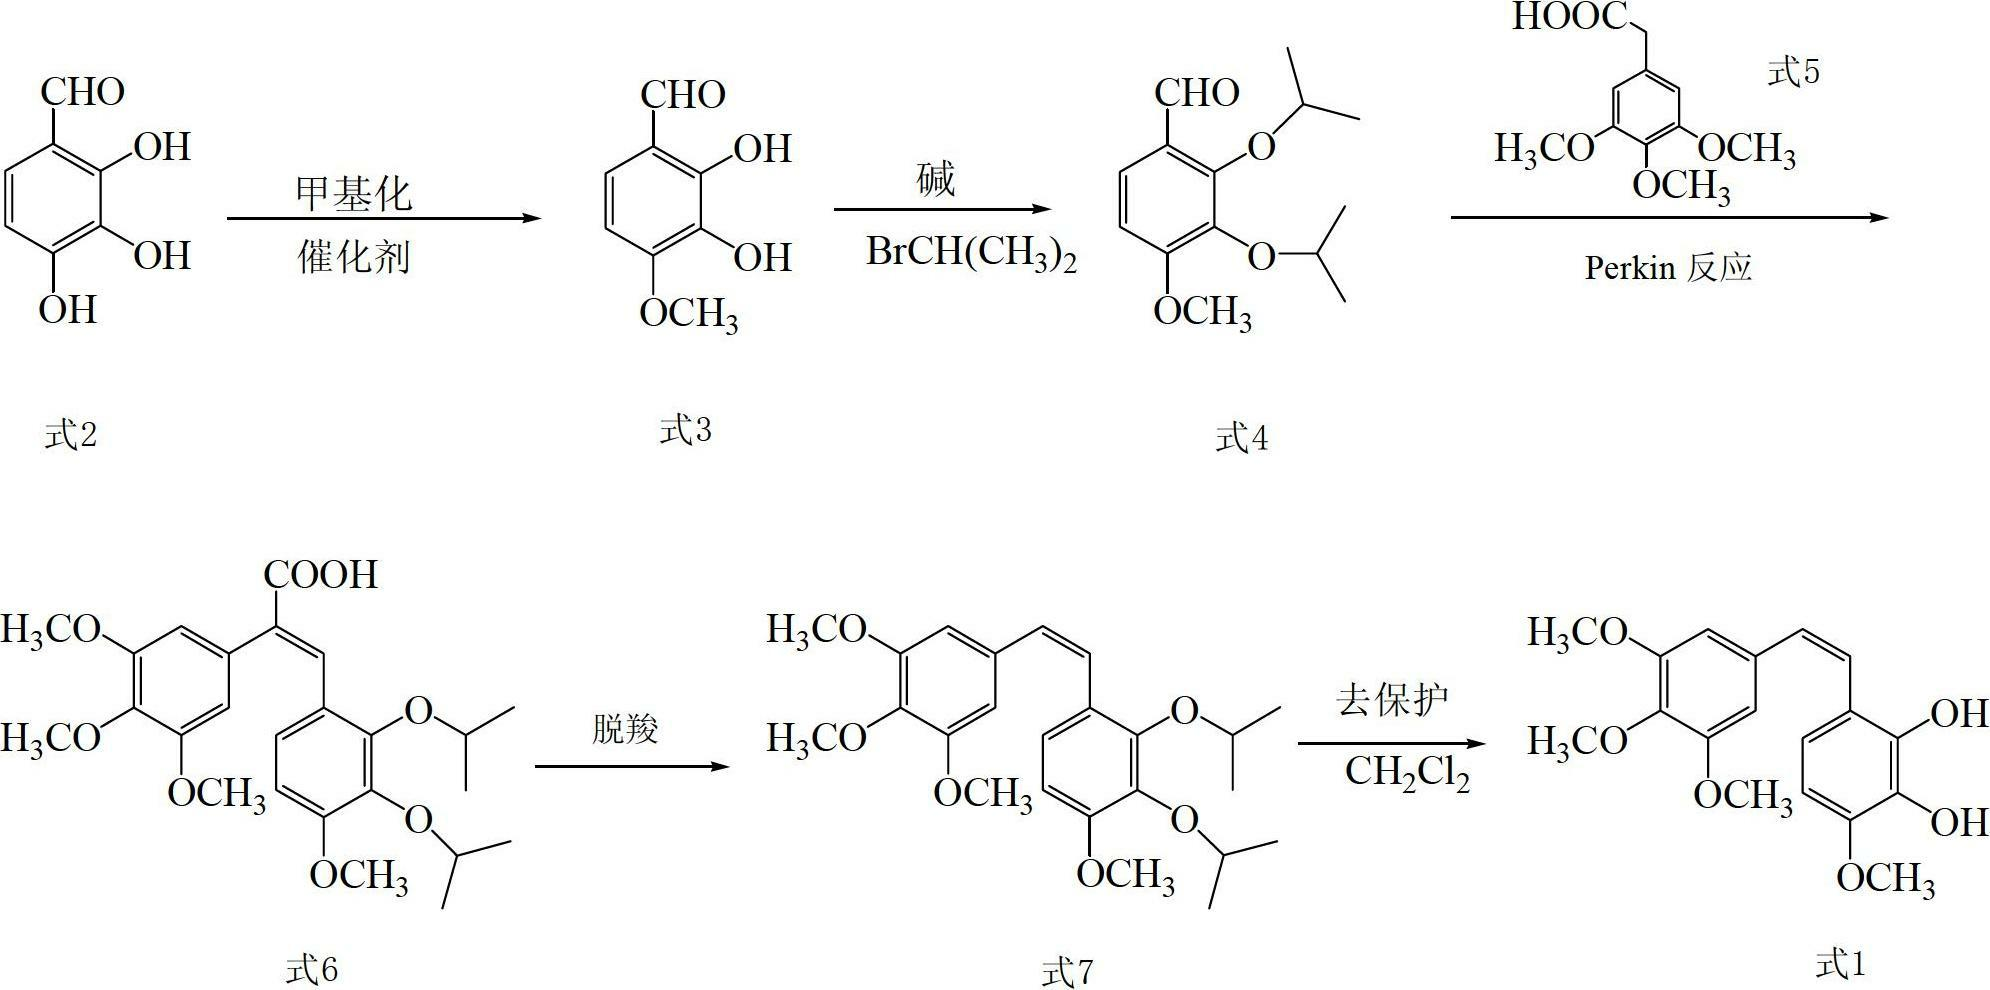 Preparation method and application of Z-3,4,4',5-tetramethoxy-2',3'-dihydroxy diphenylethylene